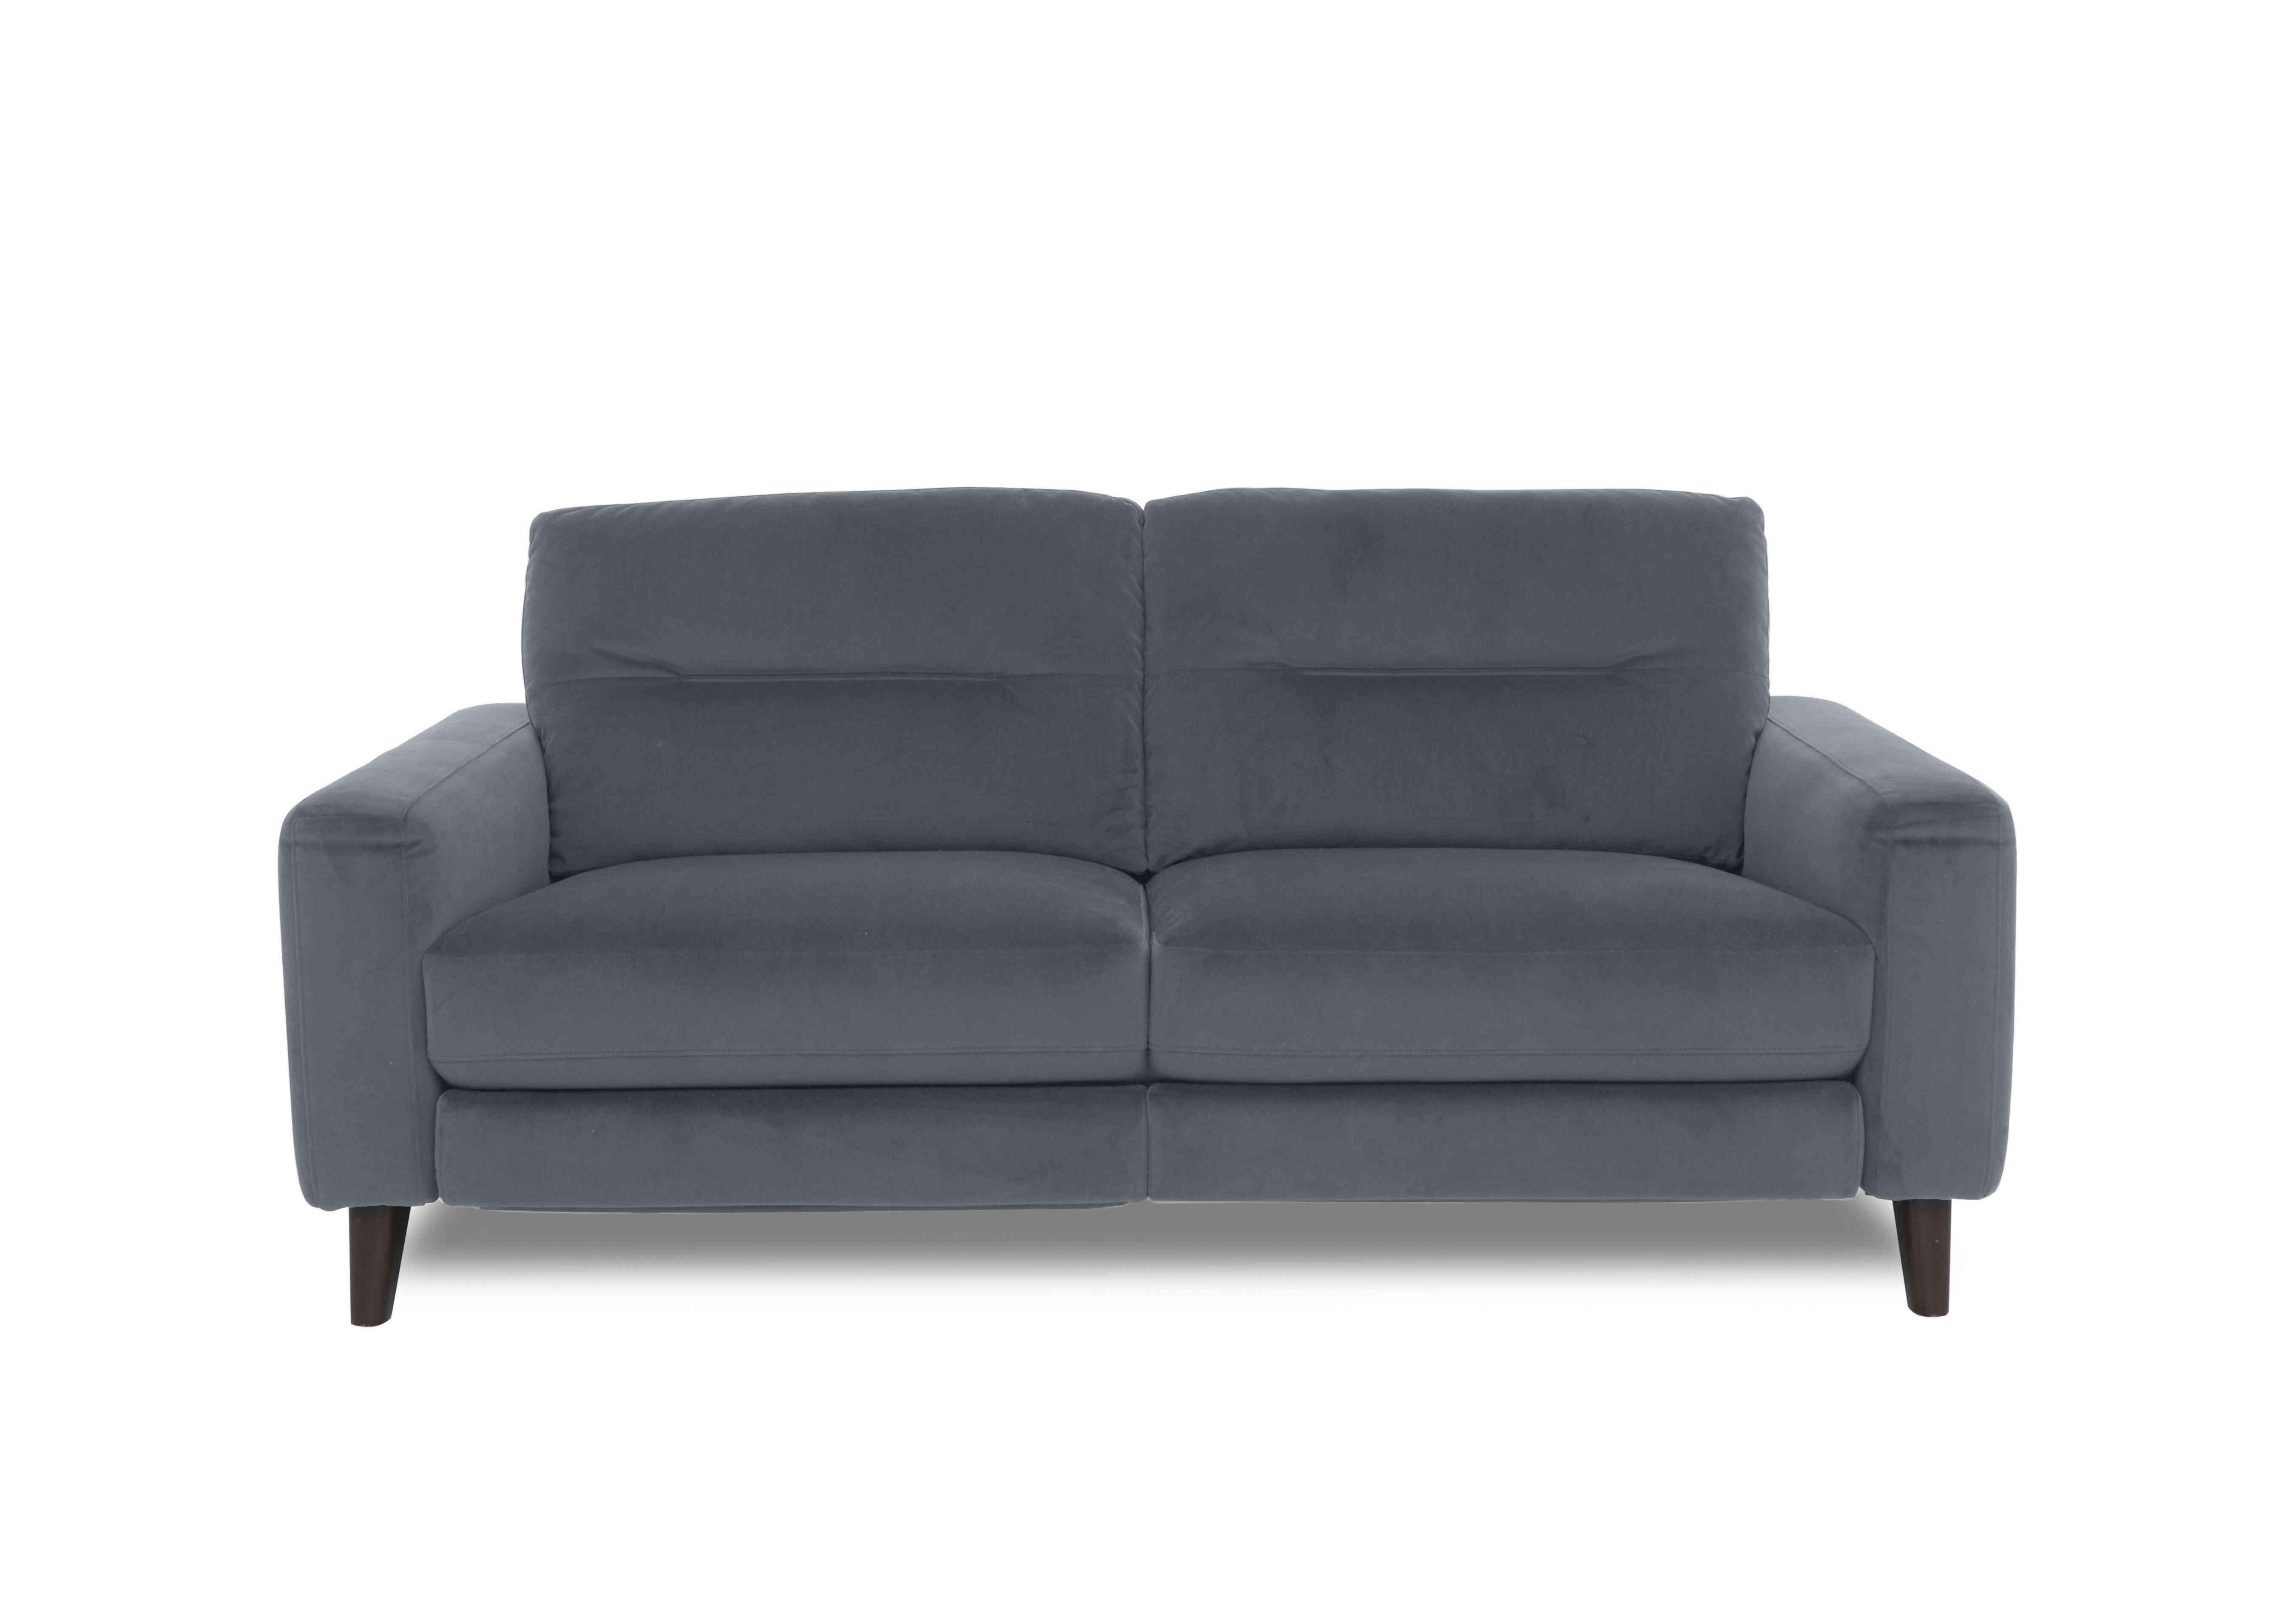 Jules 3 Seater Fabric Sofa in Fab-Meg-R20 Pewter on Furniture Village